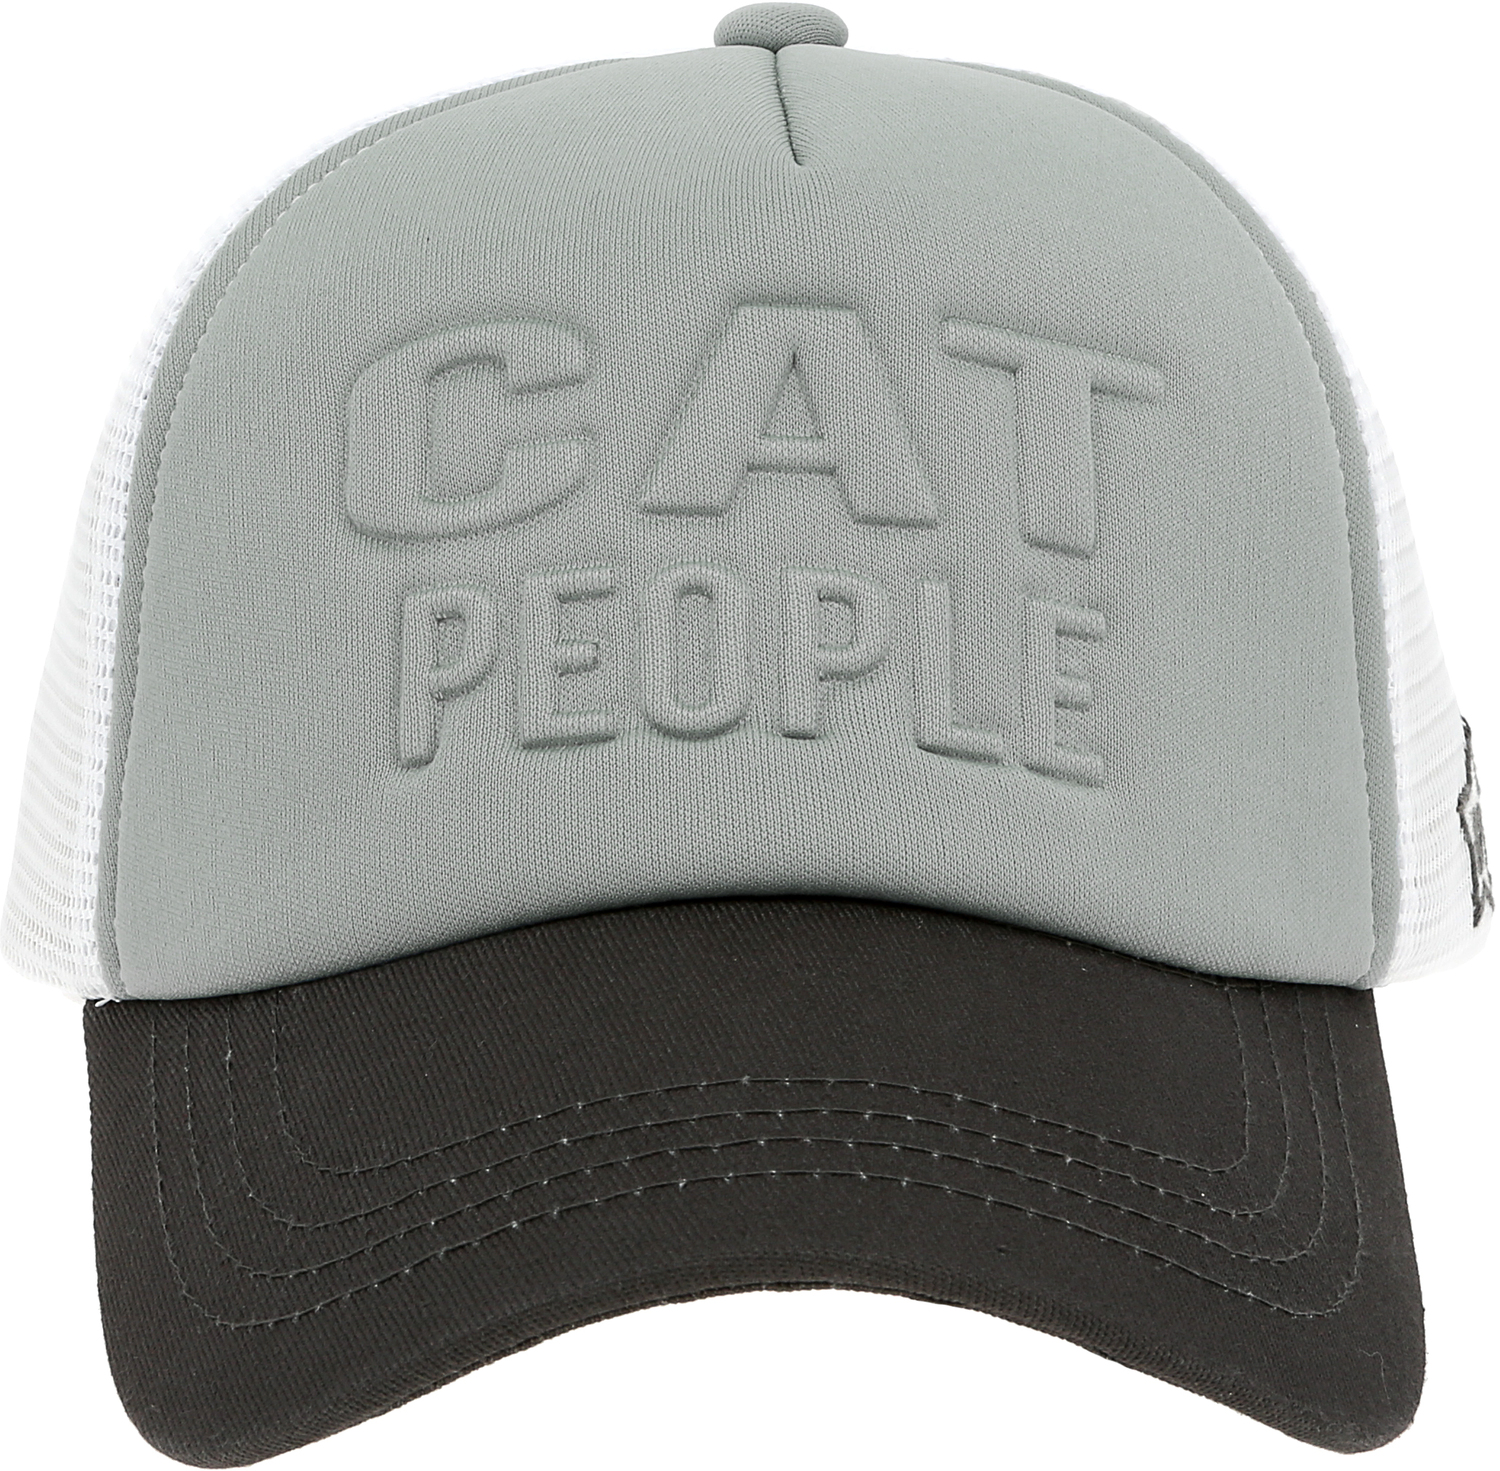 Cat People by We People - Cat People - Adjustable Light Gray Neoprene Mesh Hat